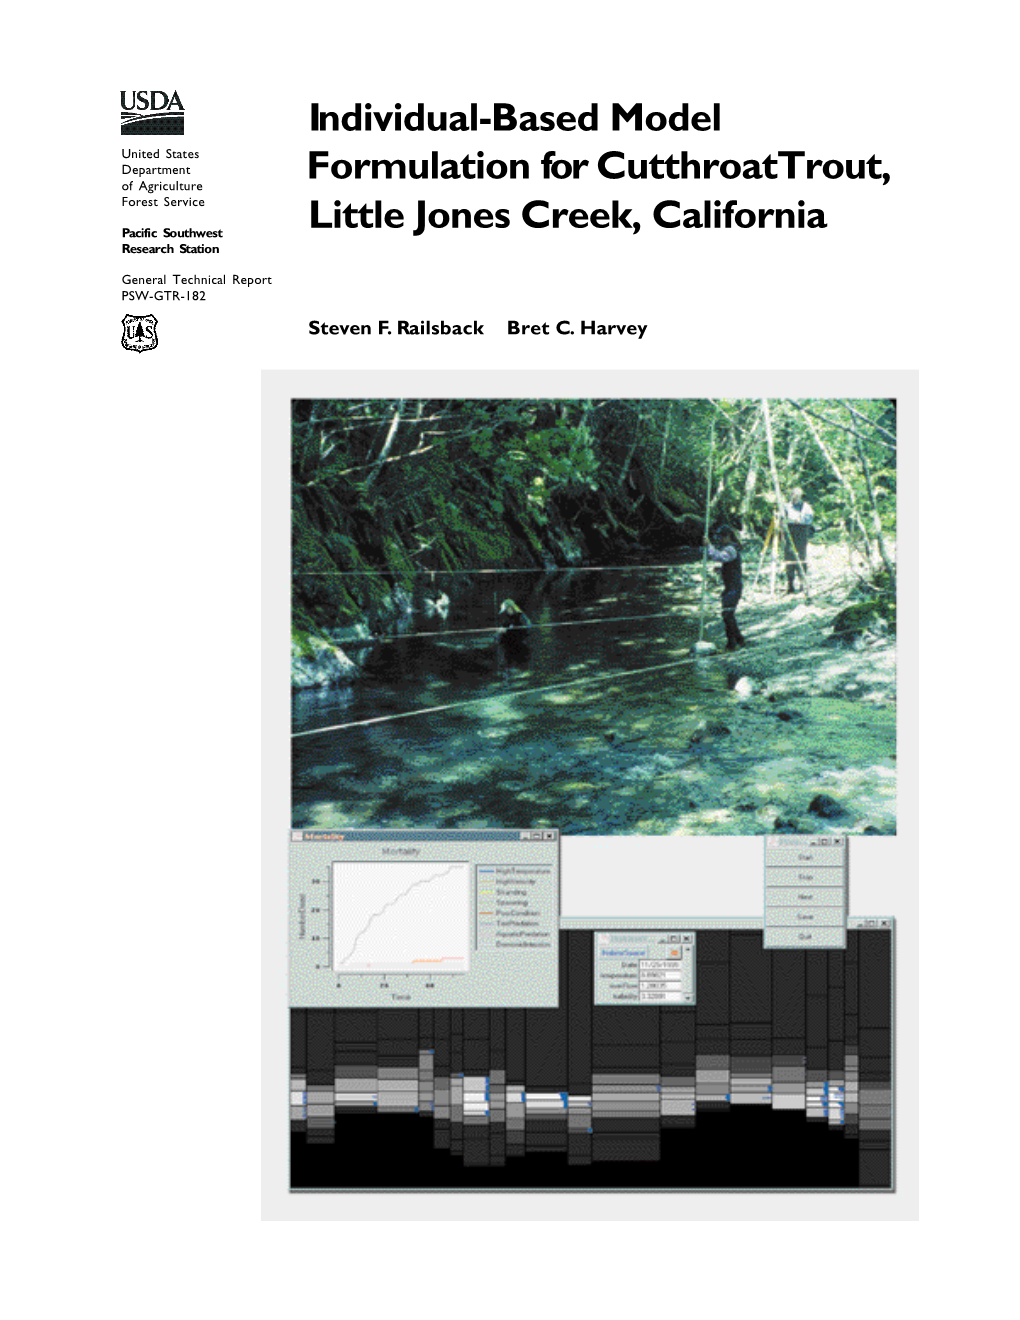 Individual-Based Model Formulation for Cutthroat Trout, Little Jones Creek, California